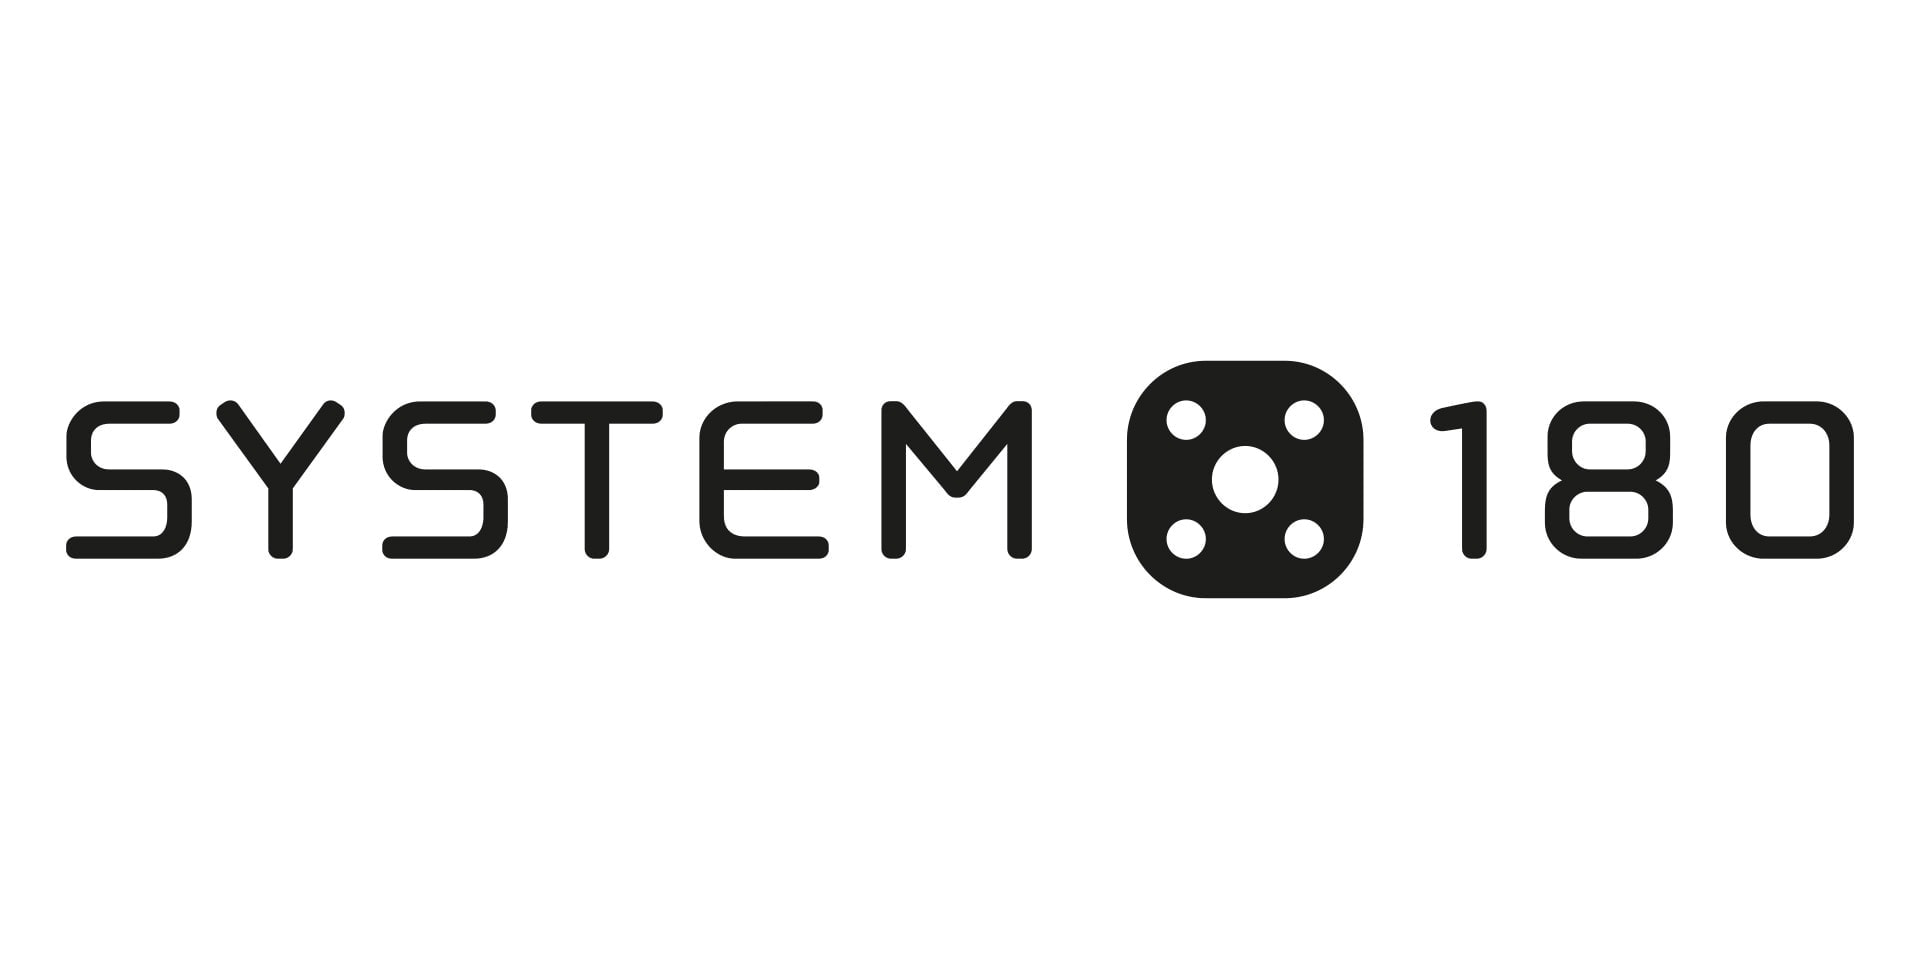 System180